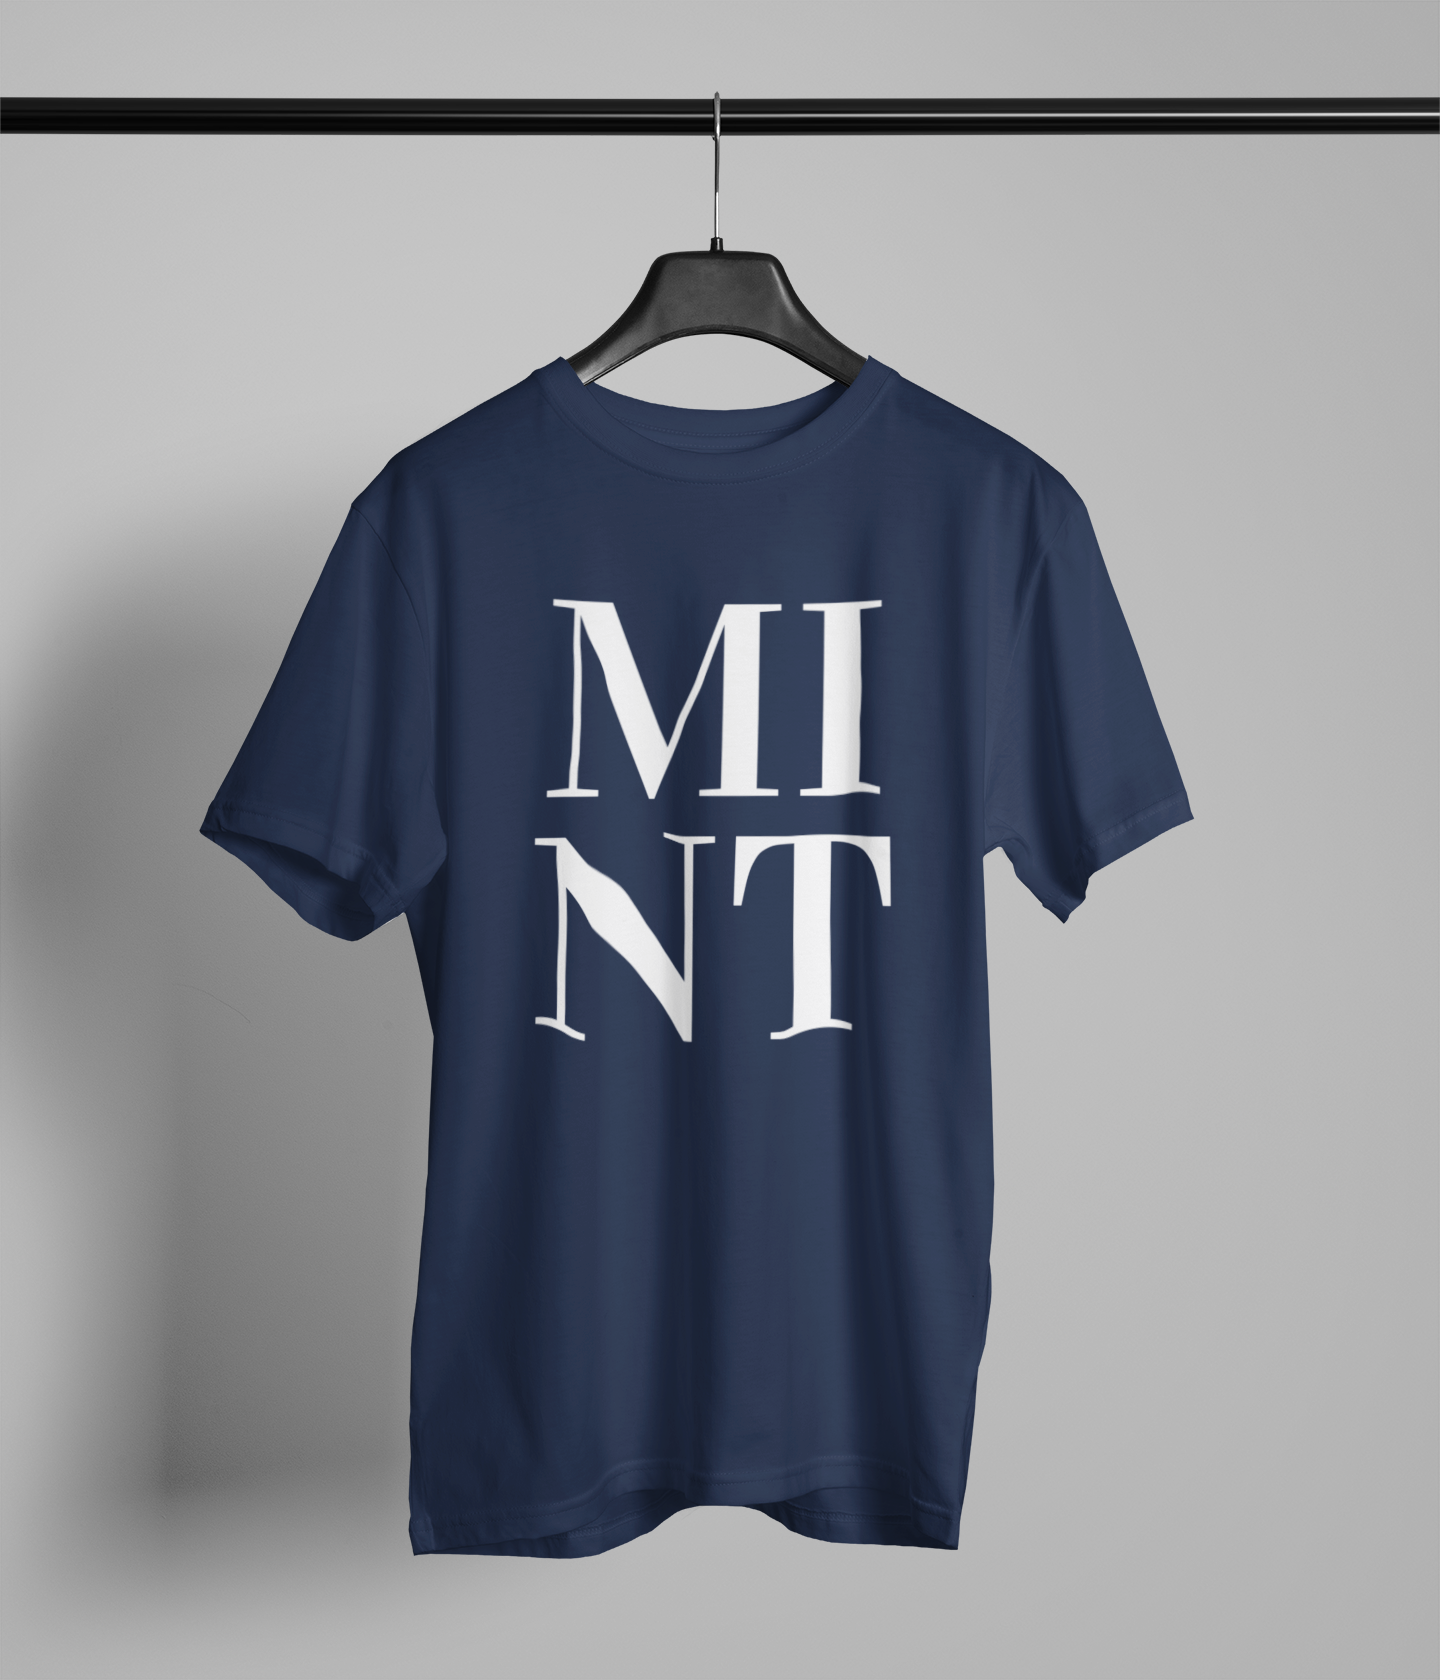 MINT Northern Slang T-Shirt Unisex